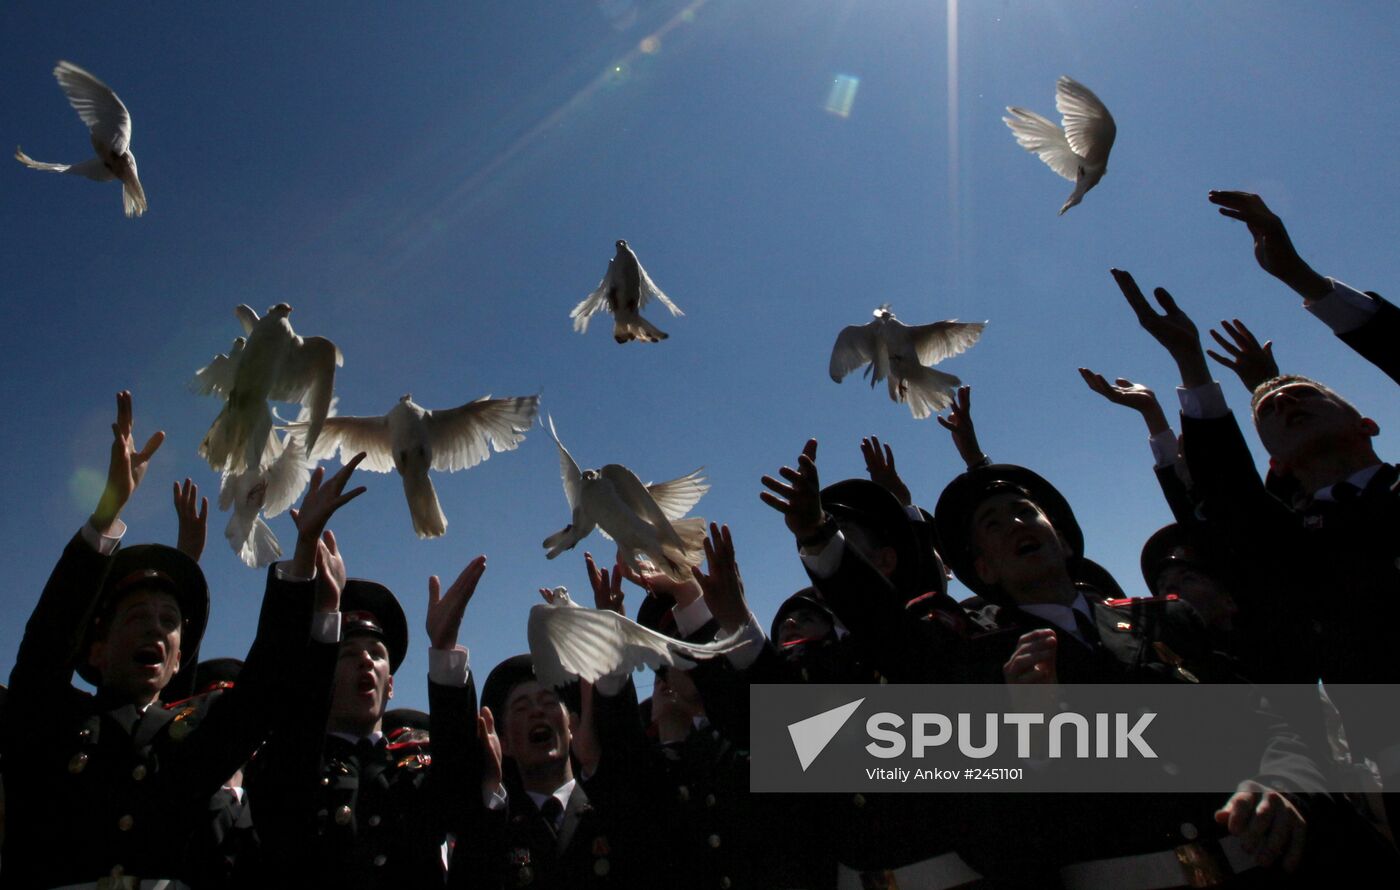 Graduation party at Ussuriysk Suvorov military school